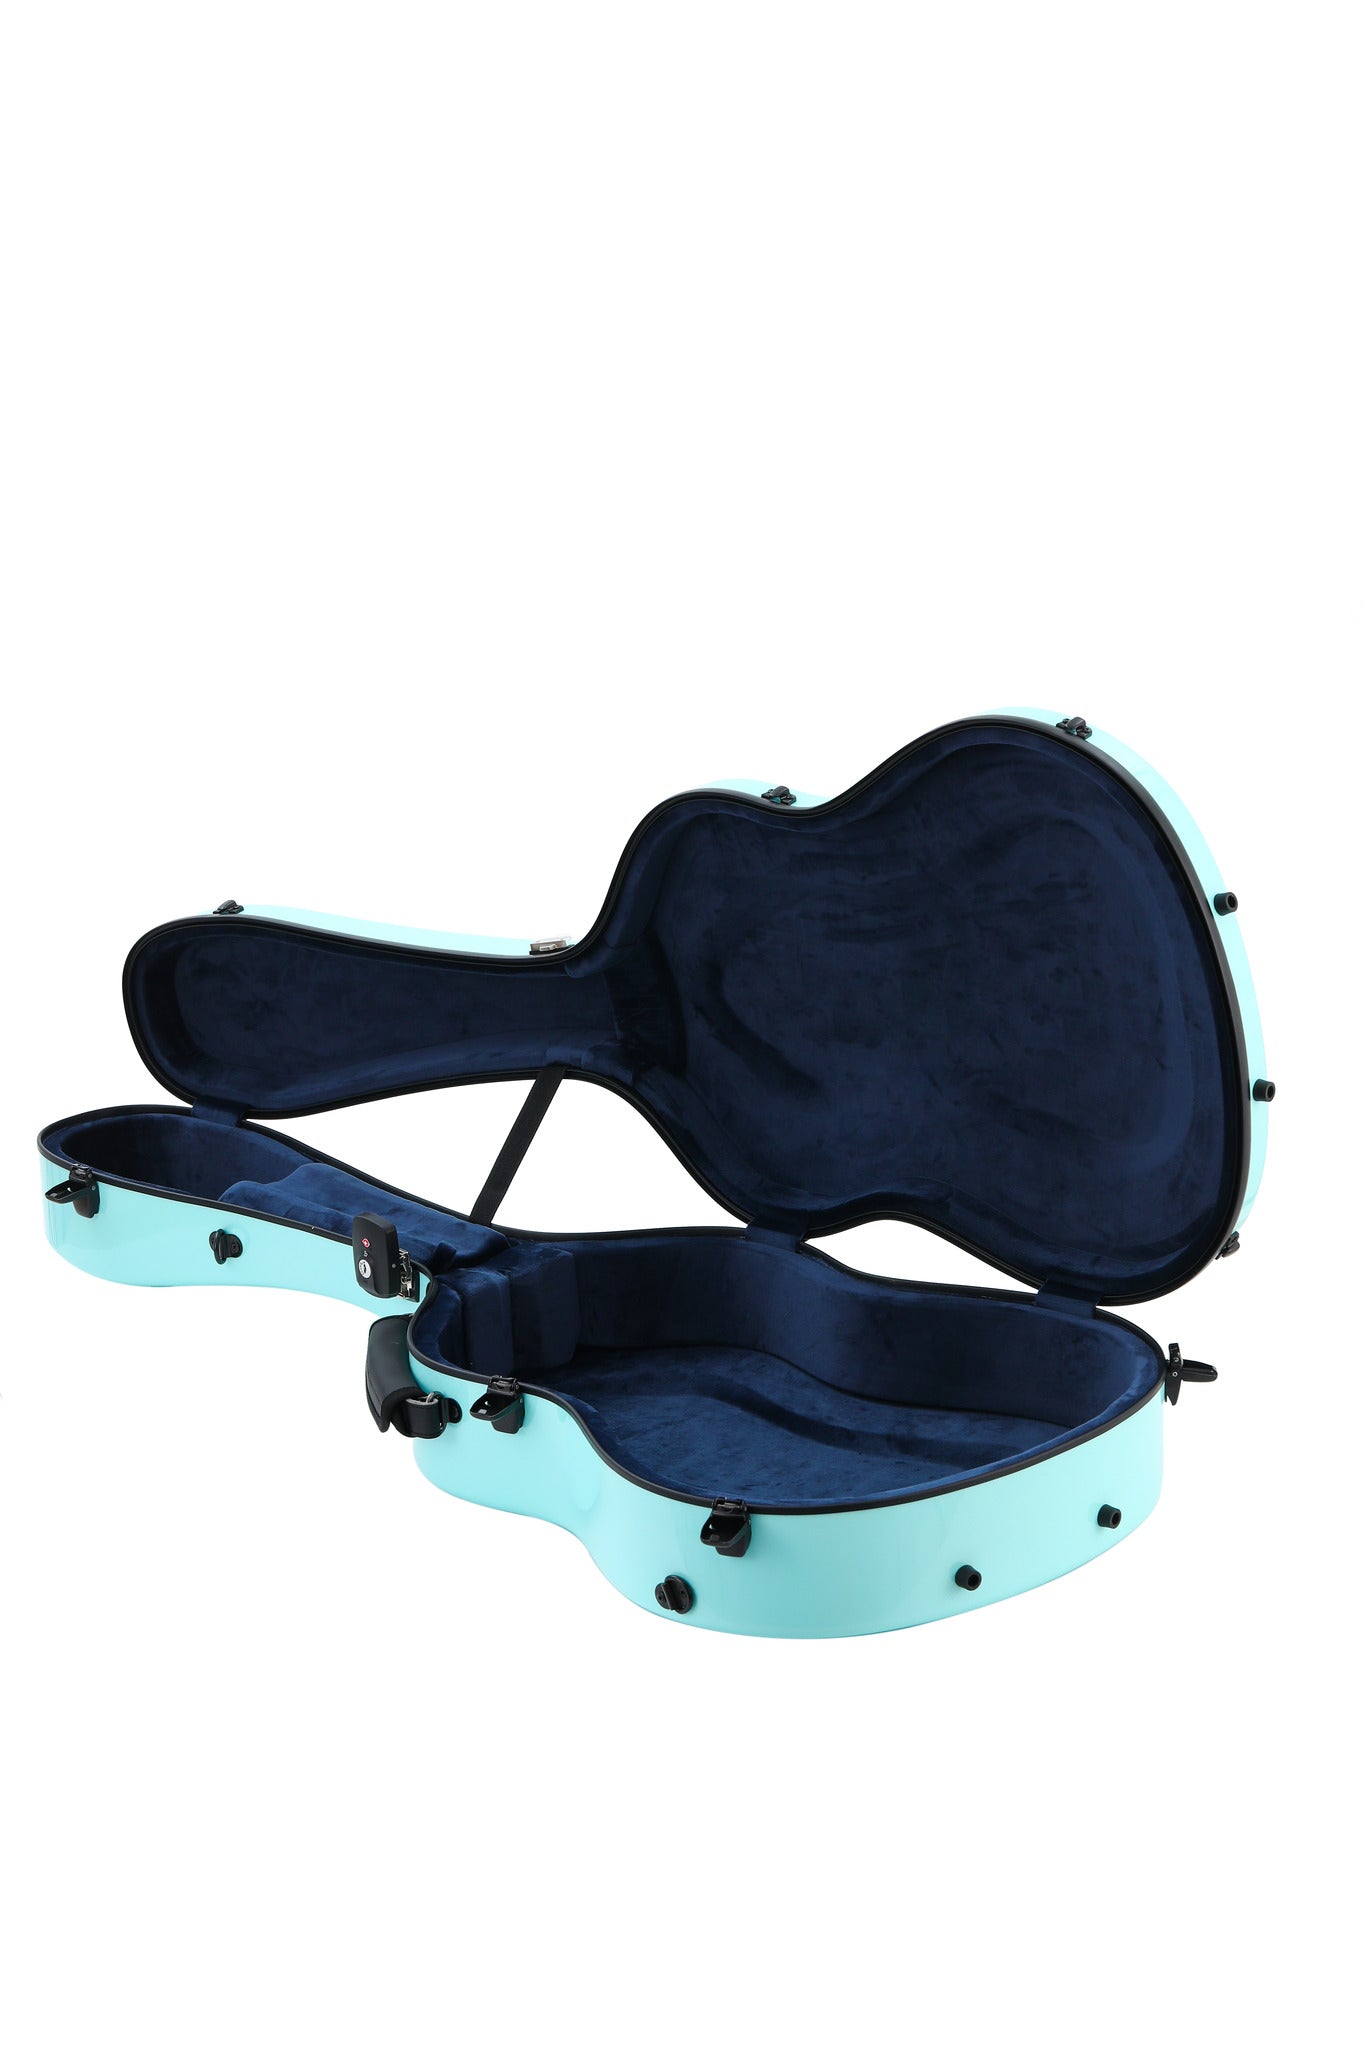 Alba Guitar Beads Case Tiffany Carbon Pattern Gloss für klassische Gitarre, Akustikgitarre, Flamenco-Gitarrenkoffer